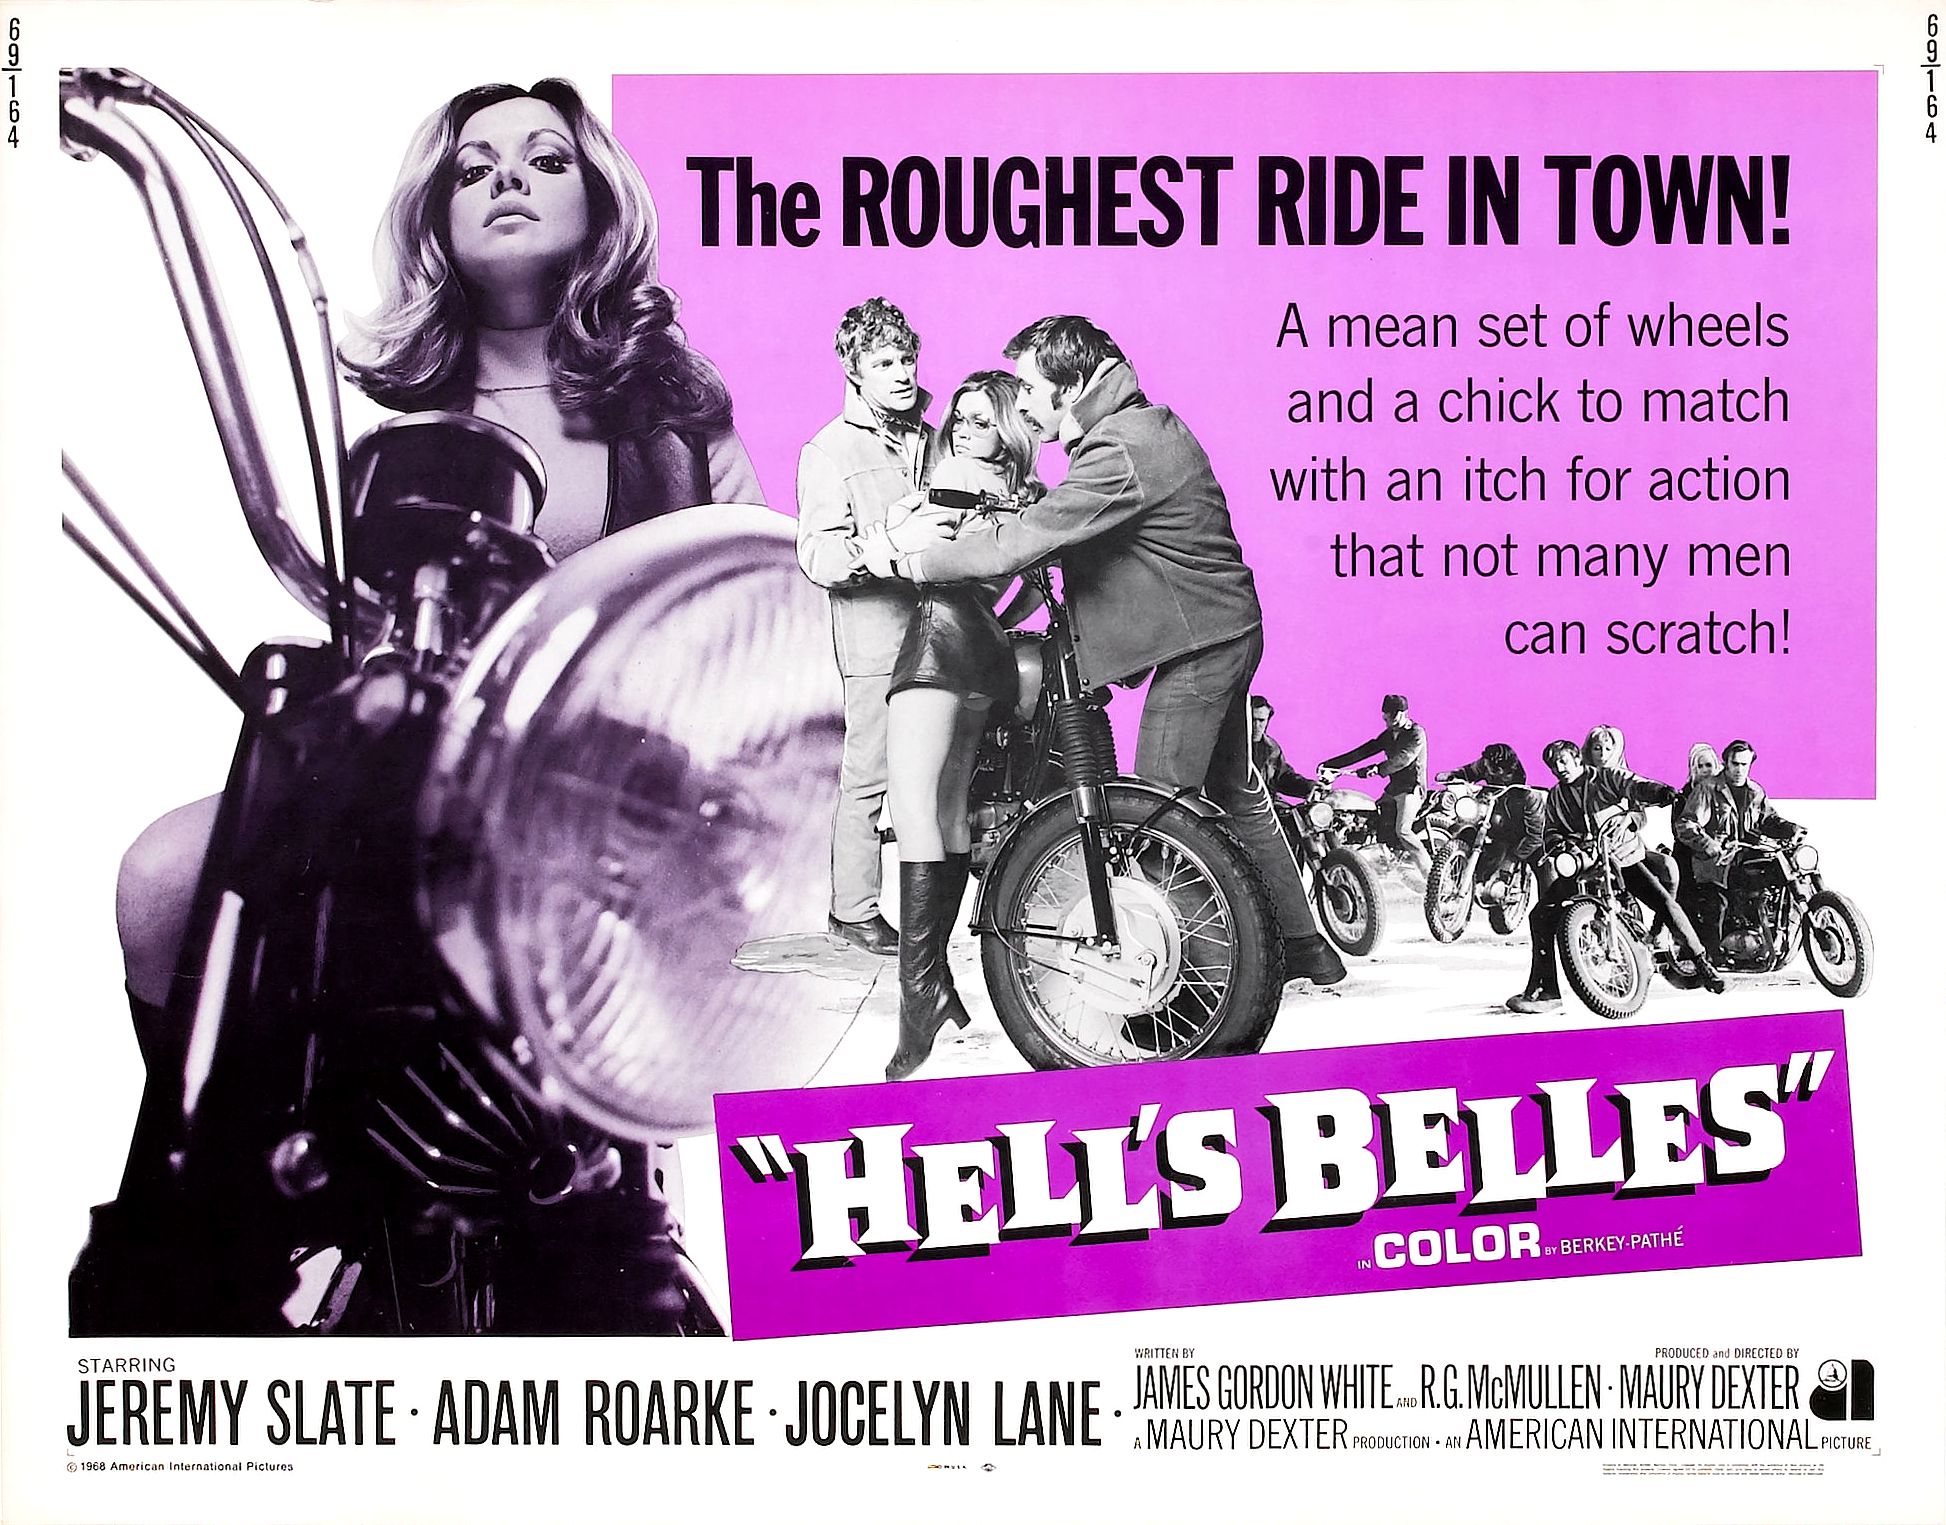 Hell's Belles (1970)